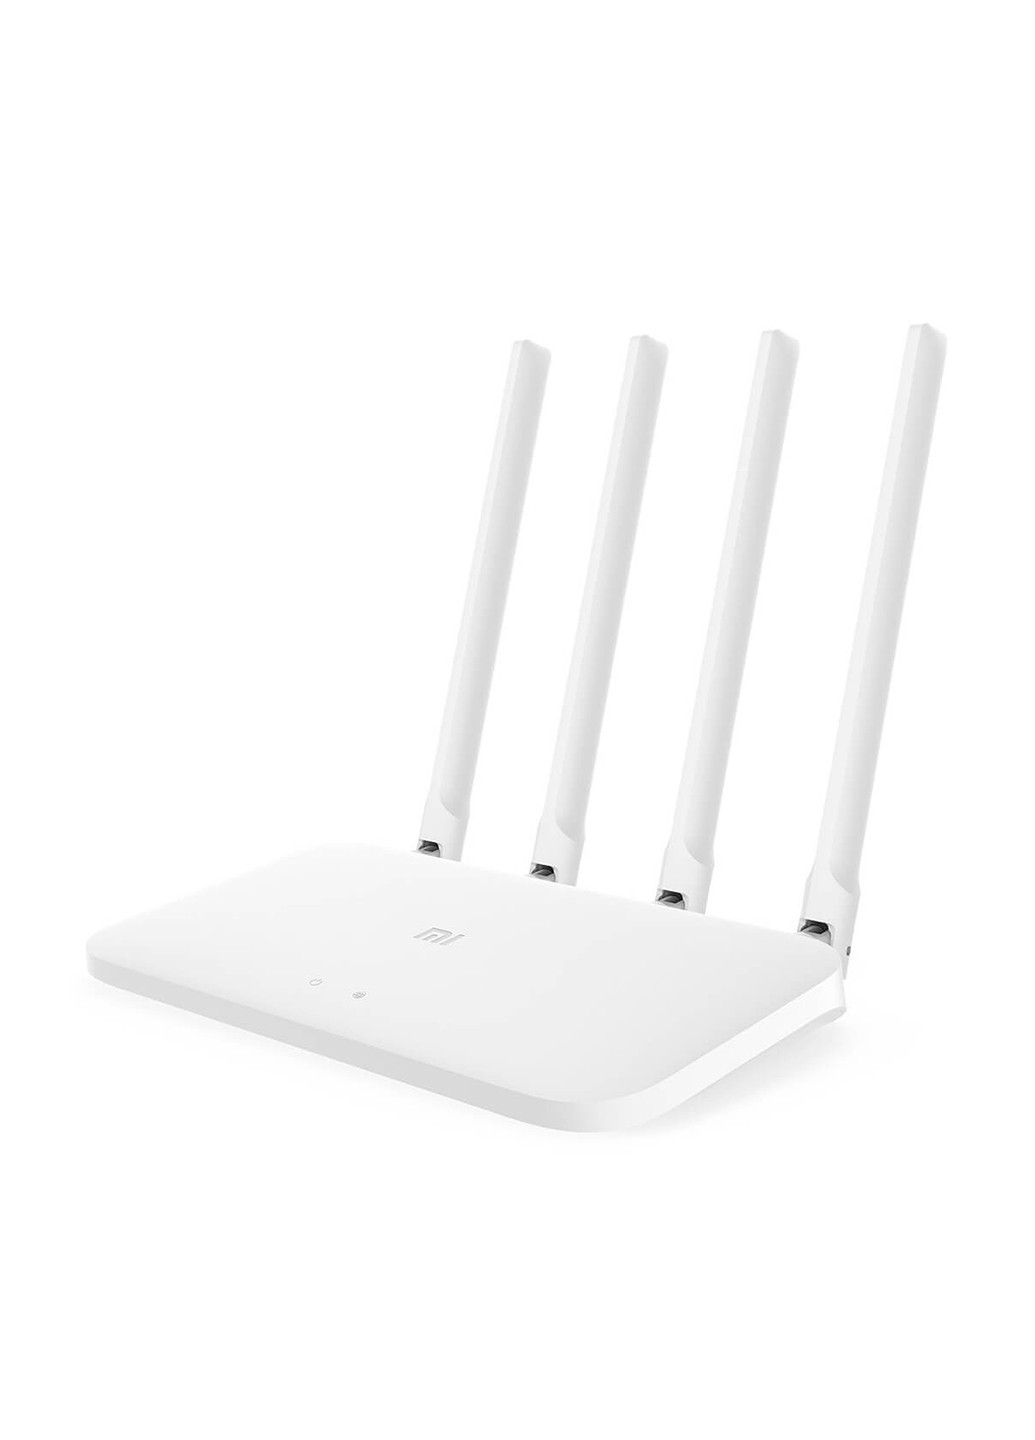 Маршрутизатор Mi WiFi Router 4A Gigabit Edition (DVB4218CN) Xiaomi маршрутизатор xiaomi mi wifi router 4a gigabit edition (dvb4218cn) (134926638)